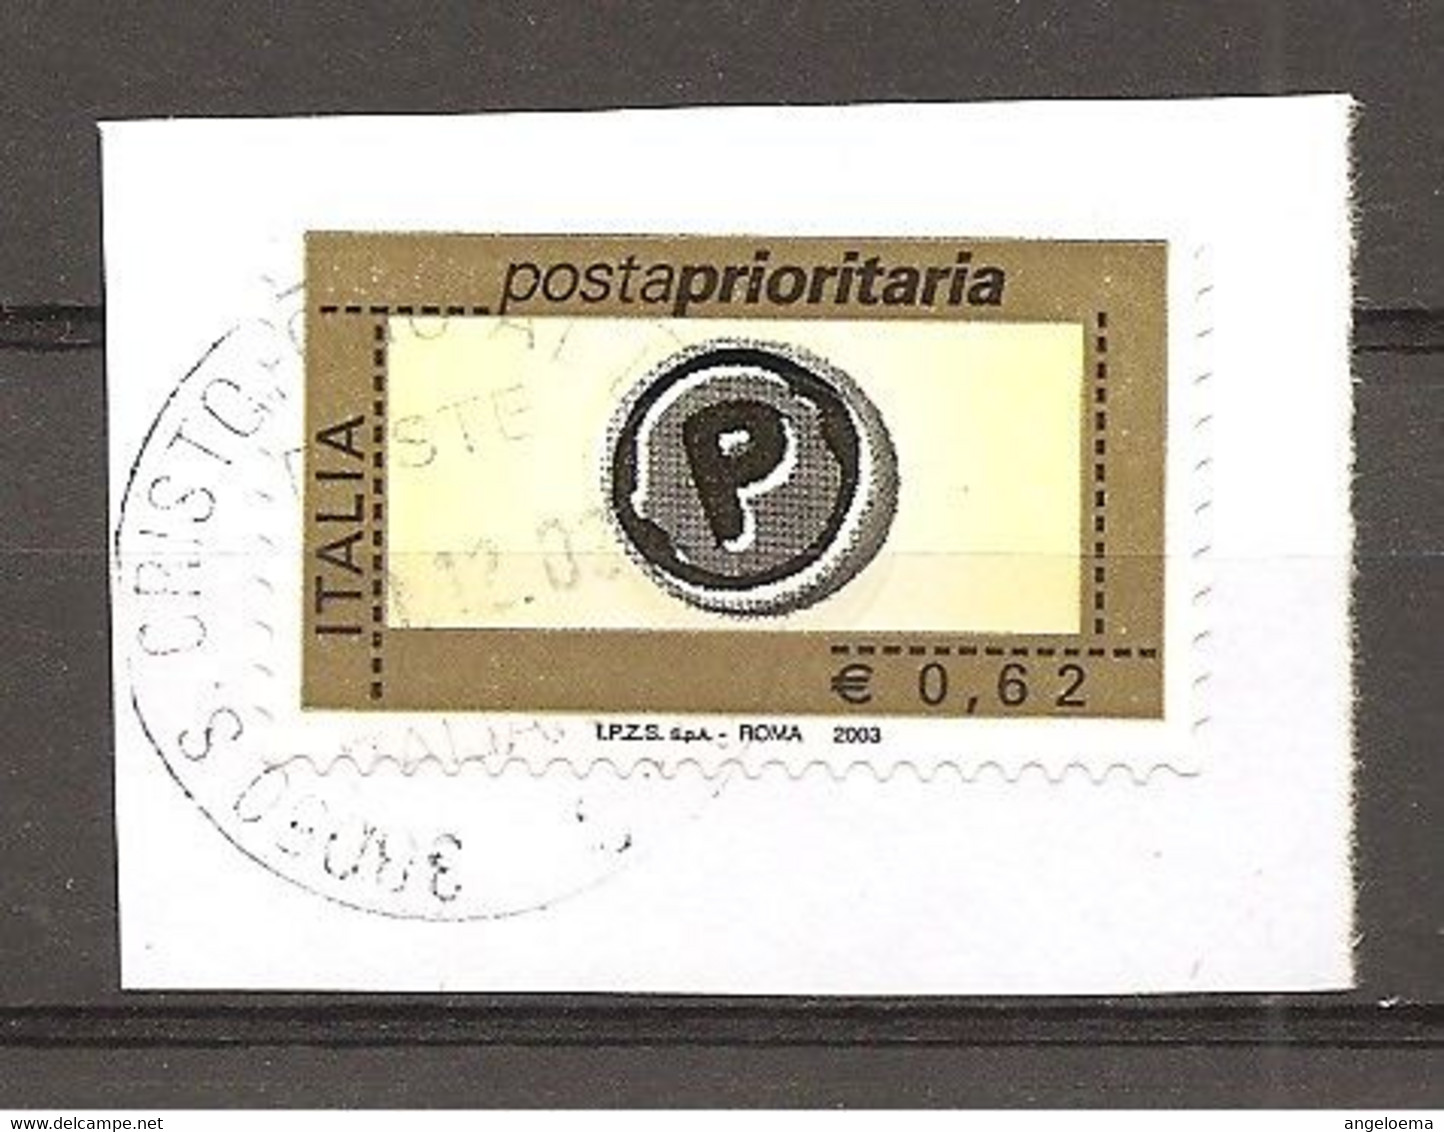 ITALIA - 2003 POSTA PRIORITARIA €0,62 Con Dicitura IPZS SpA ROMA 2003  Usato - 2001-10: Gebraucht